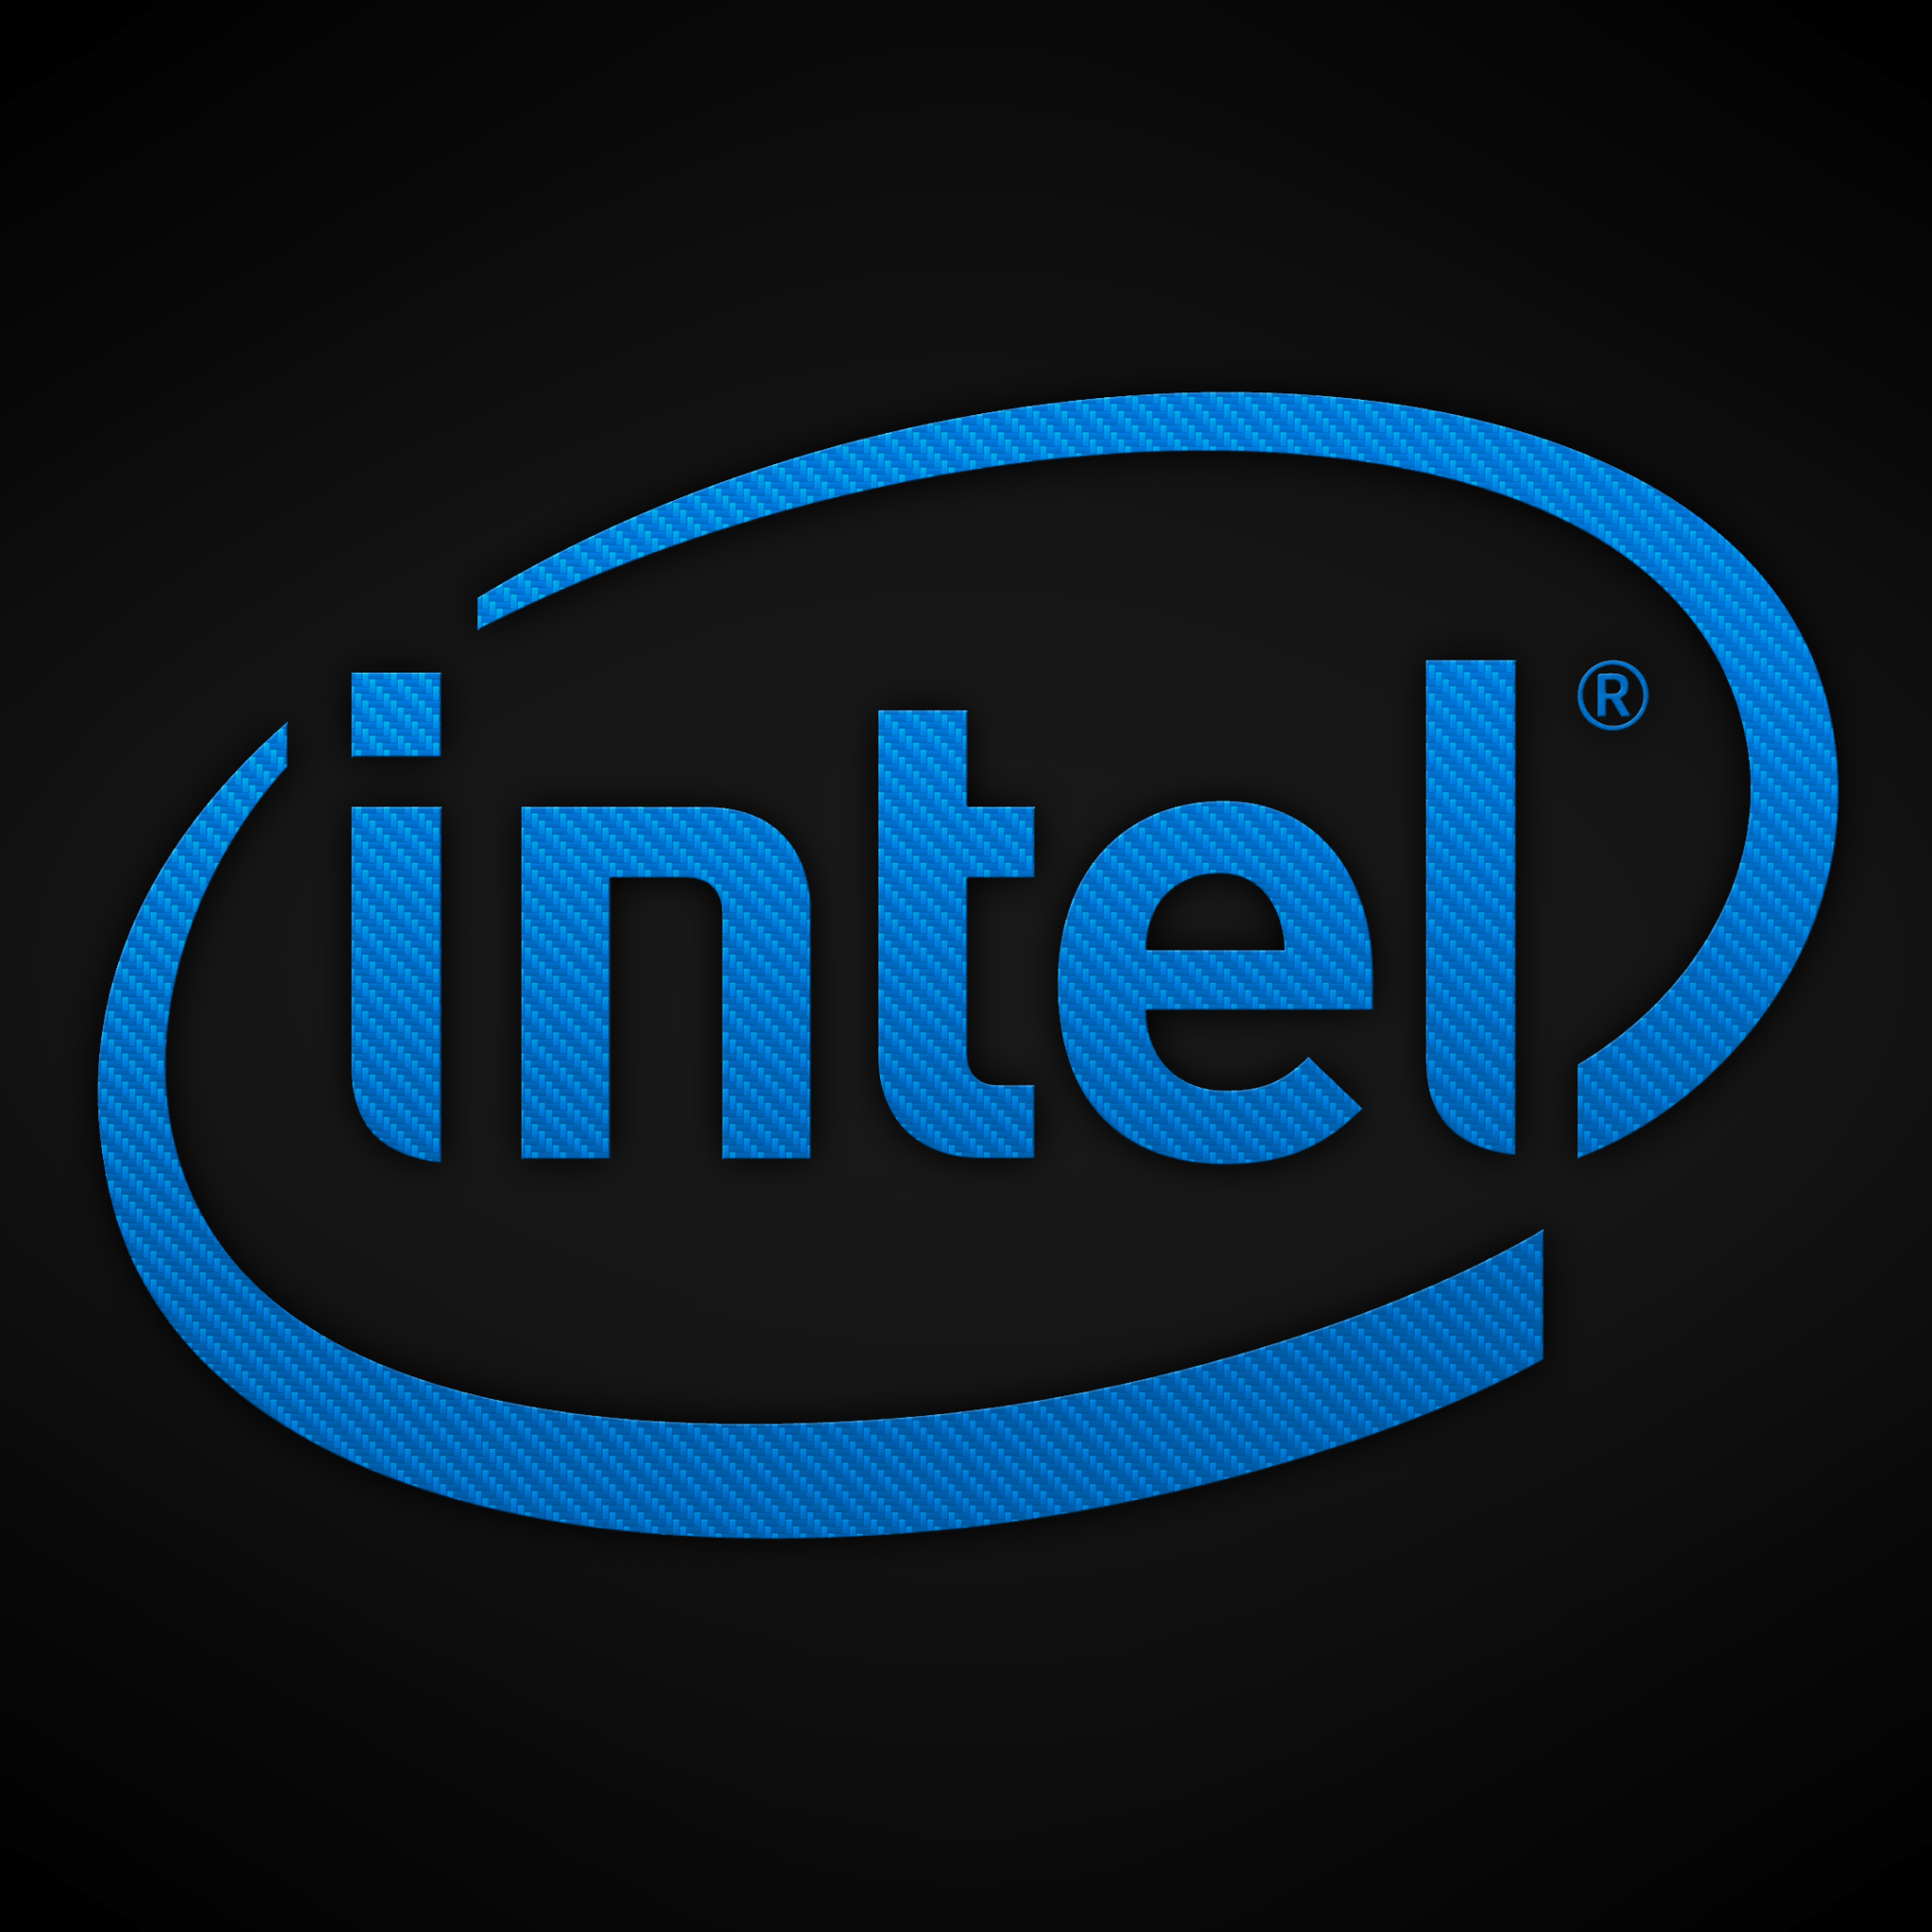 Intel Company Logo - High Definition Wallpaper Of Intel's Company Logo